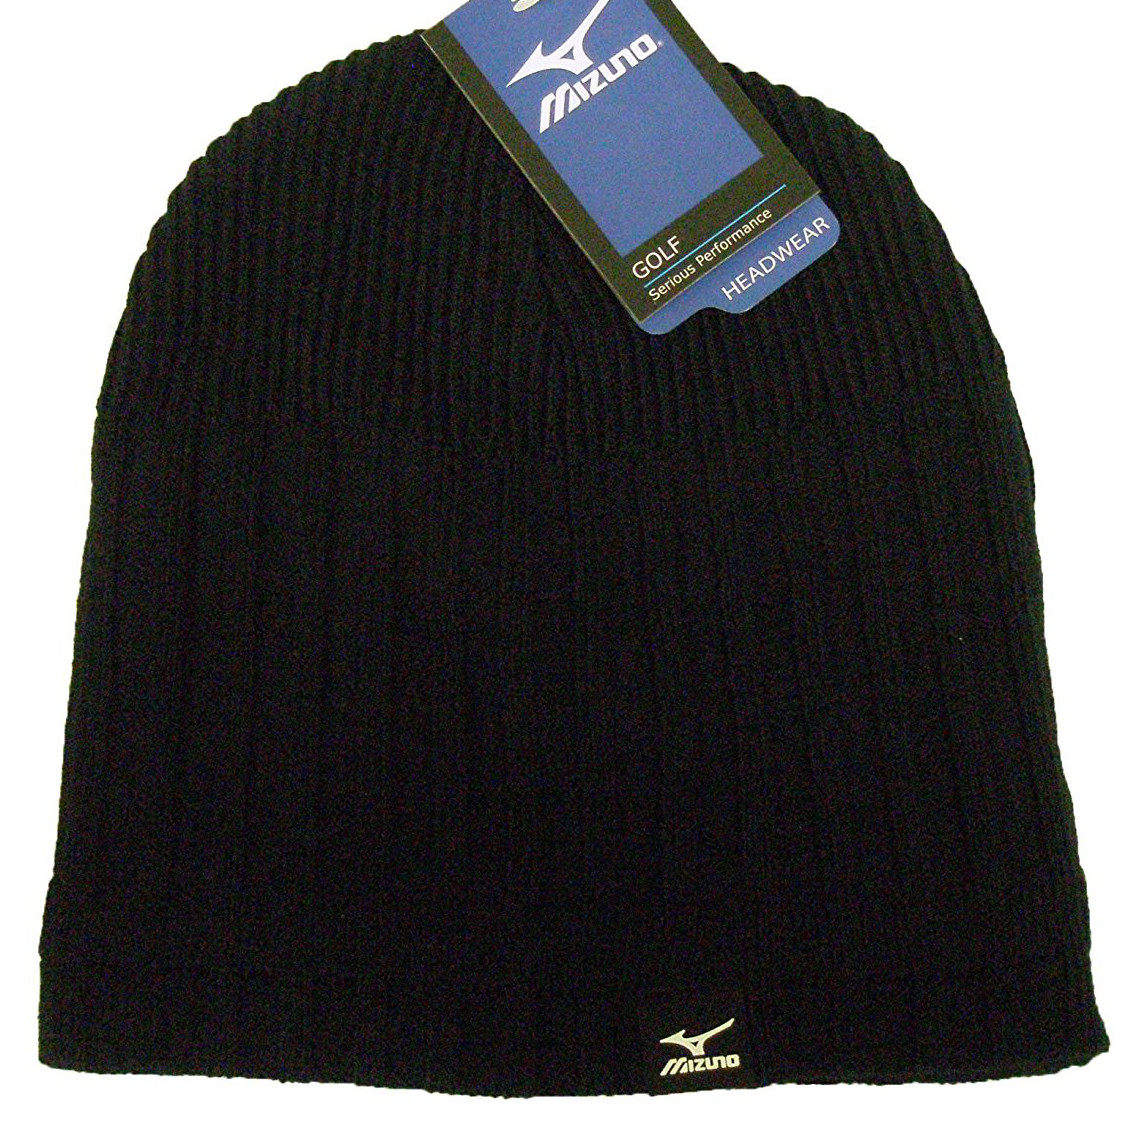 Mizuno Mens Knitted 2 Pack Golf Beanie Hats